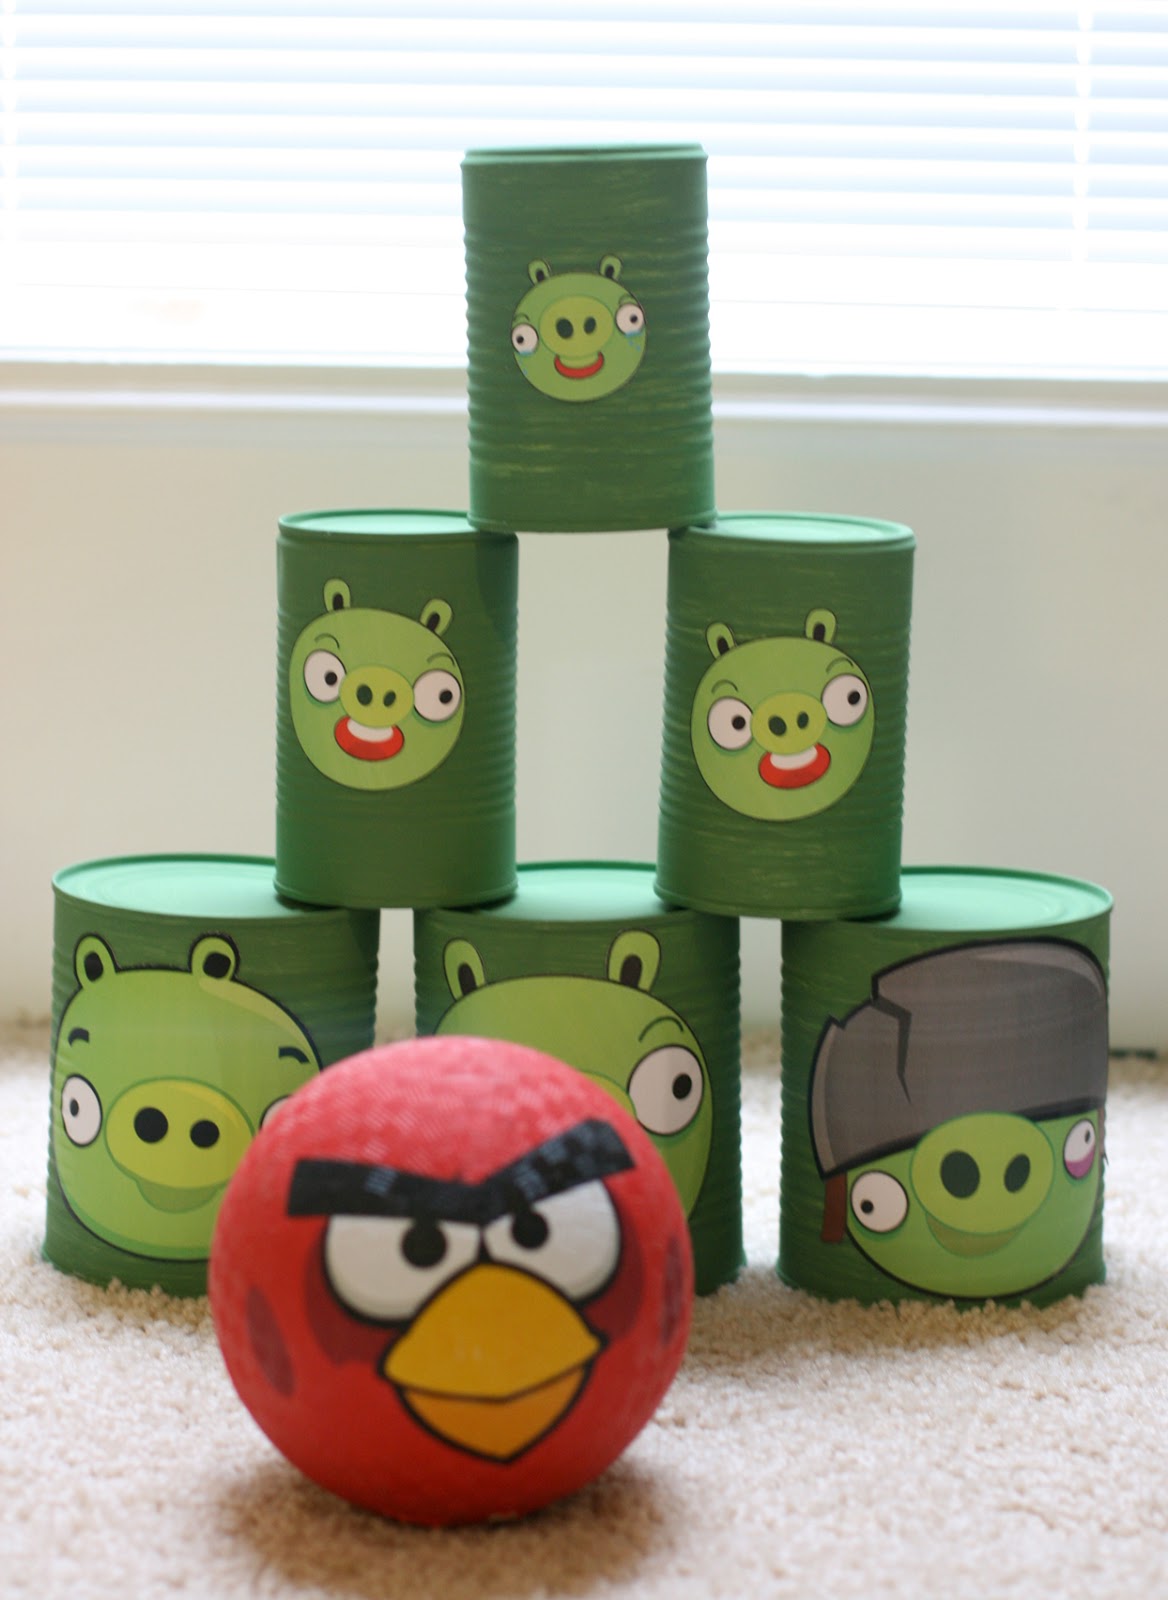 A Bushel: Angry Birds Party1168 x 1600